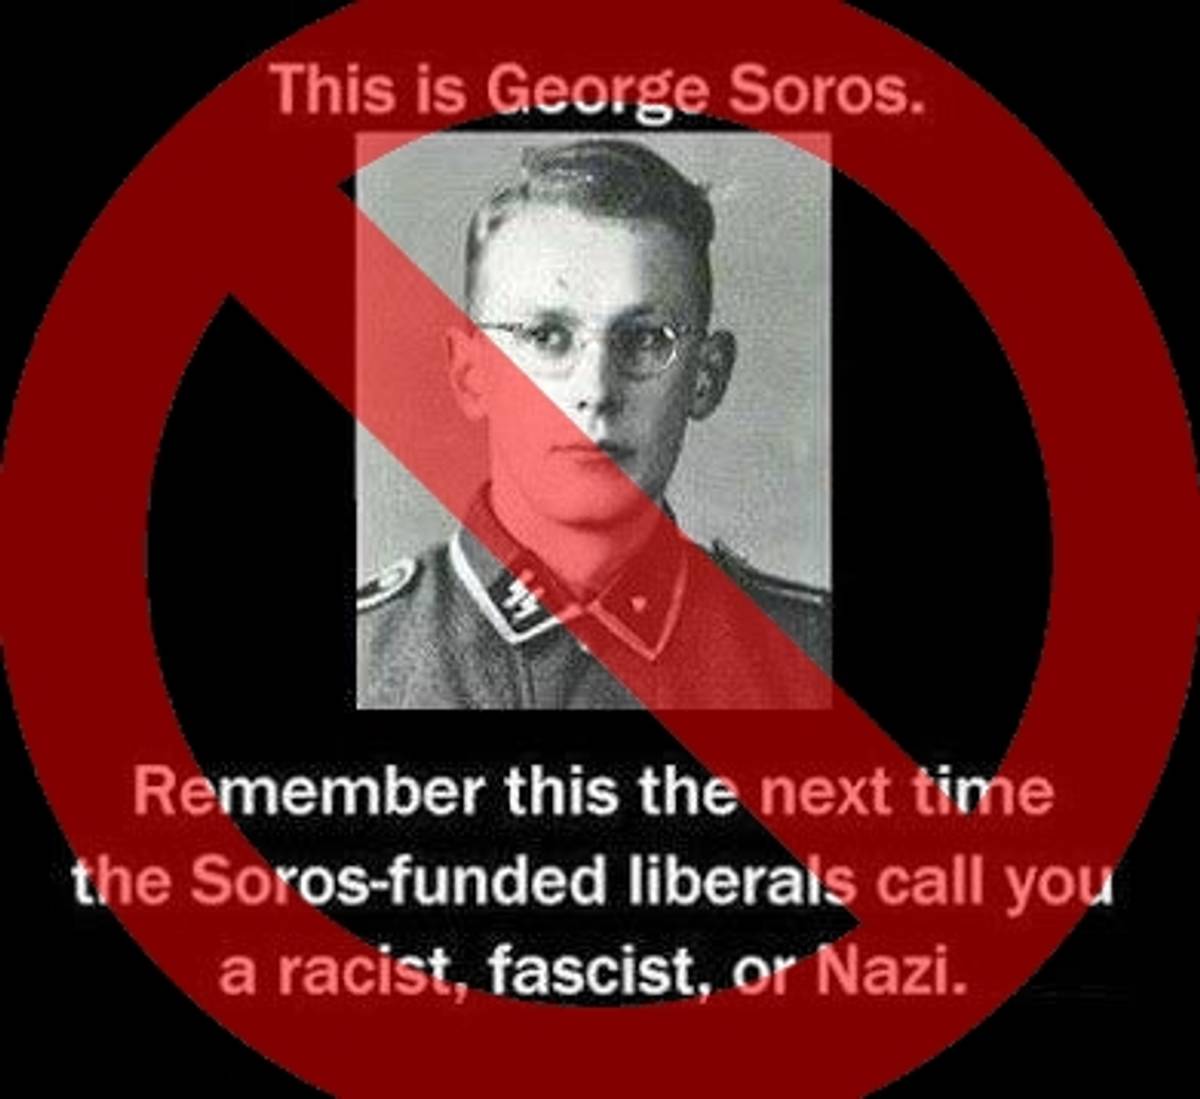 The George Soros meme